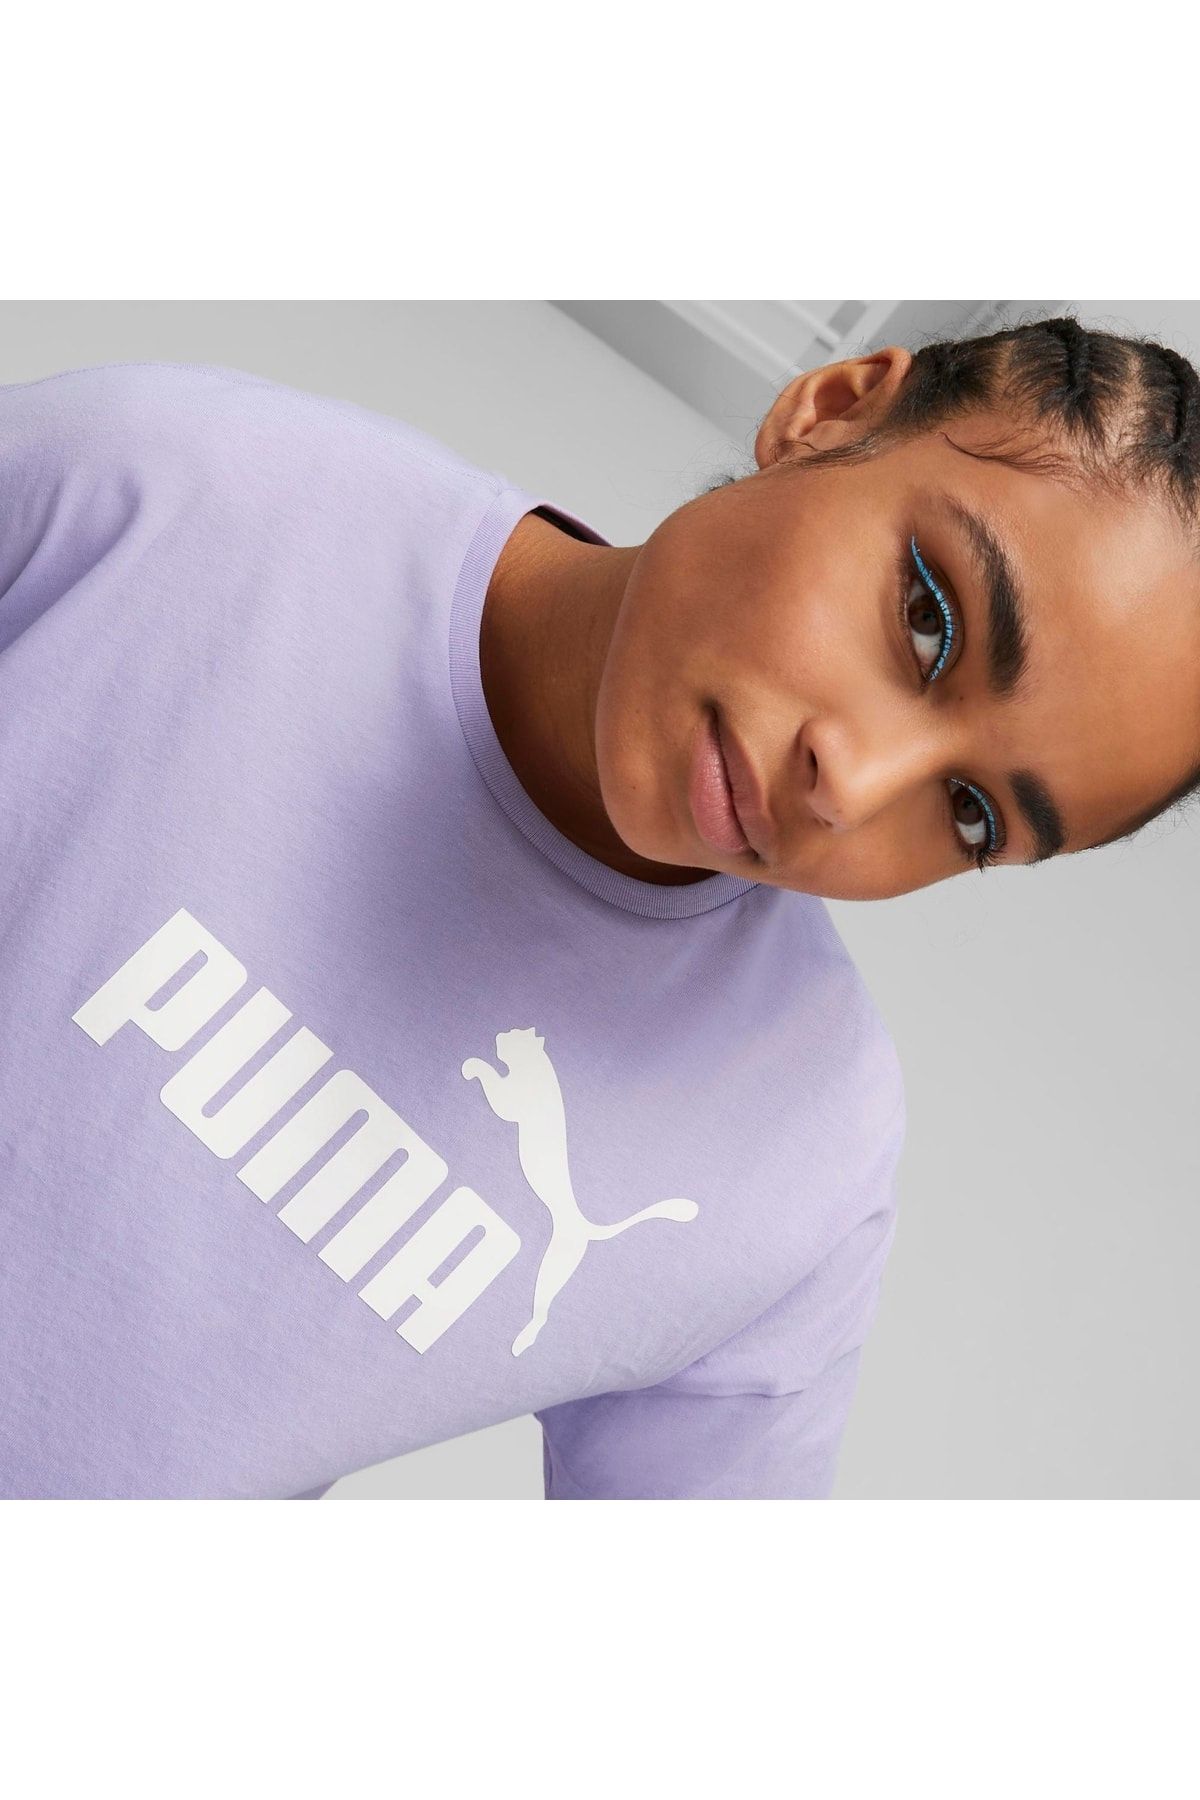 Puma Ess Cropped Logo Tee Lilac Women\'s Short Sleeve T-shirt - Trendyol